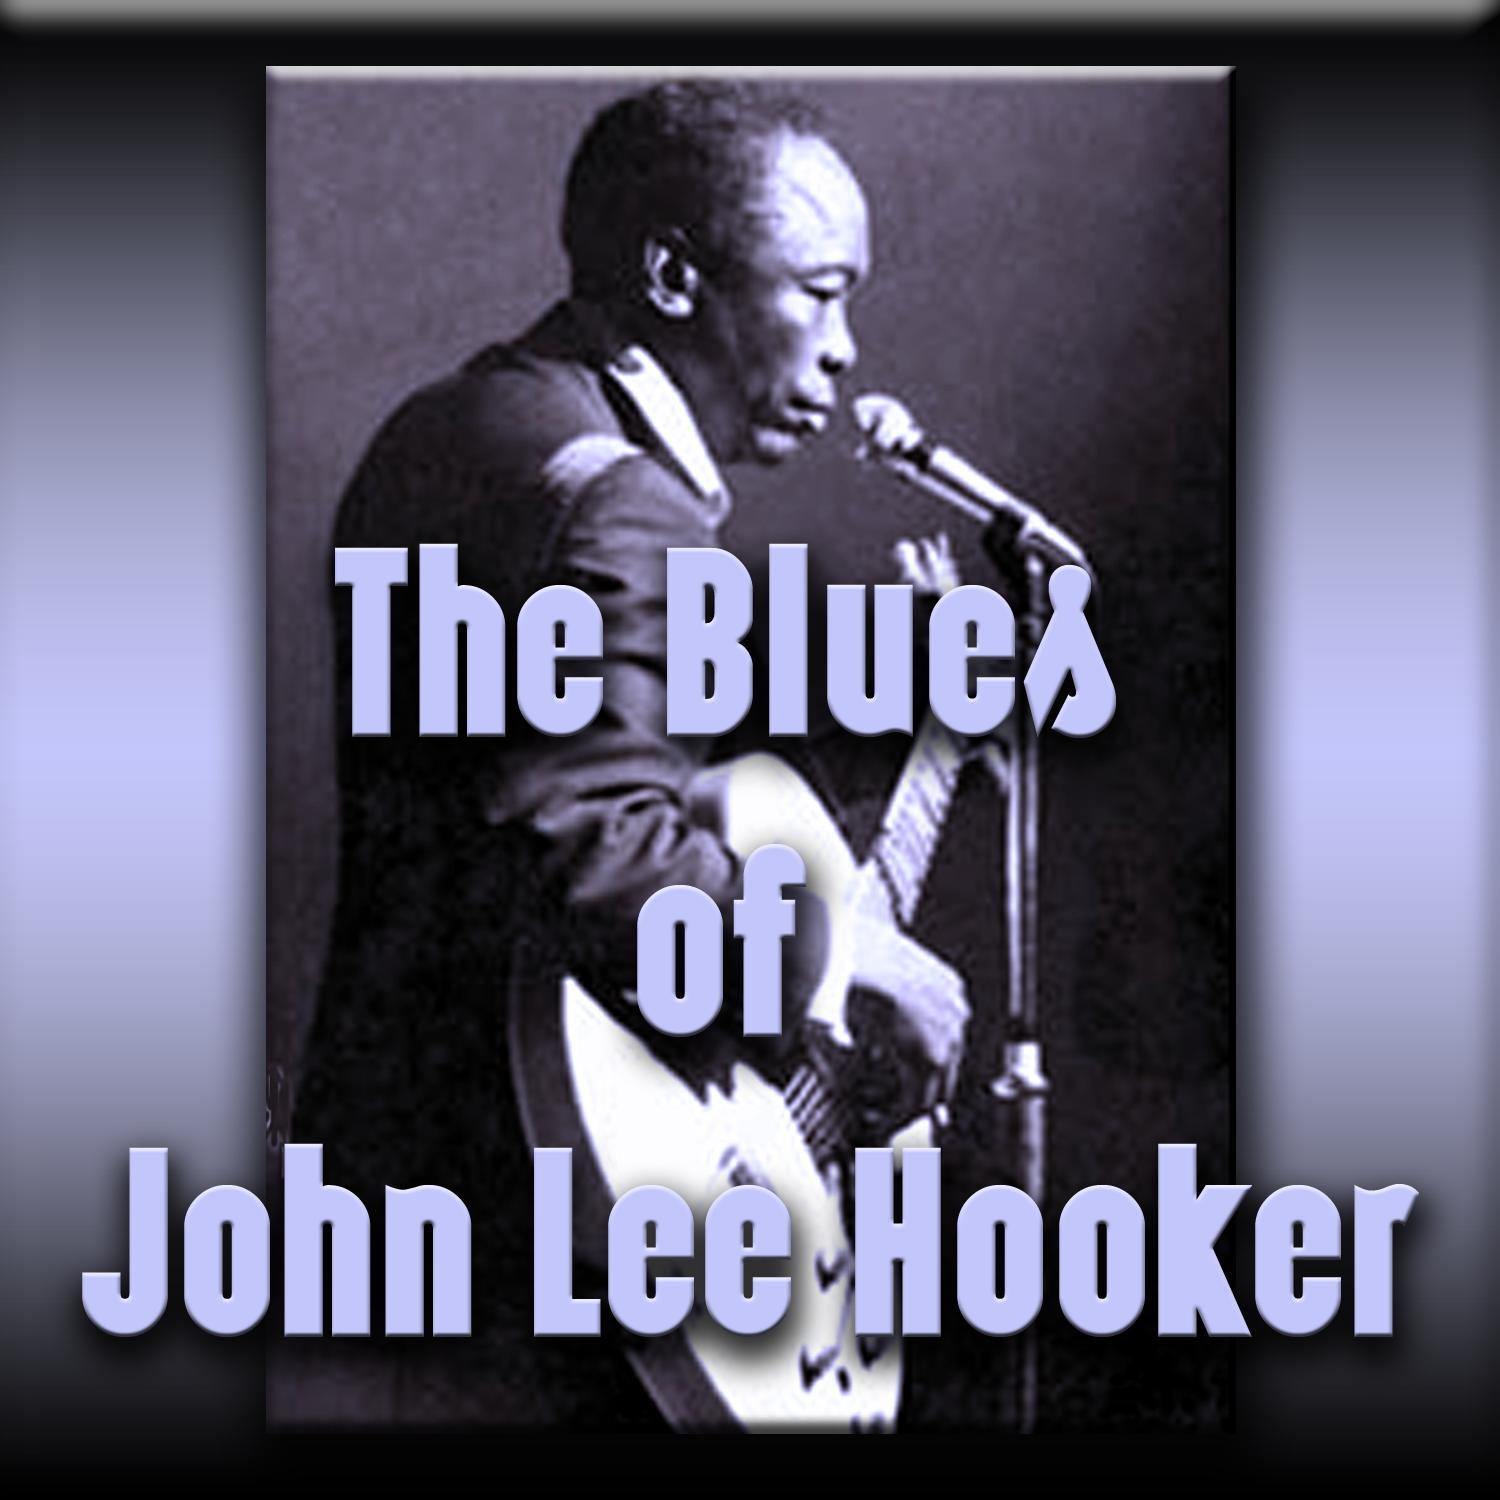 The Blues of John Lee Hooker